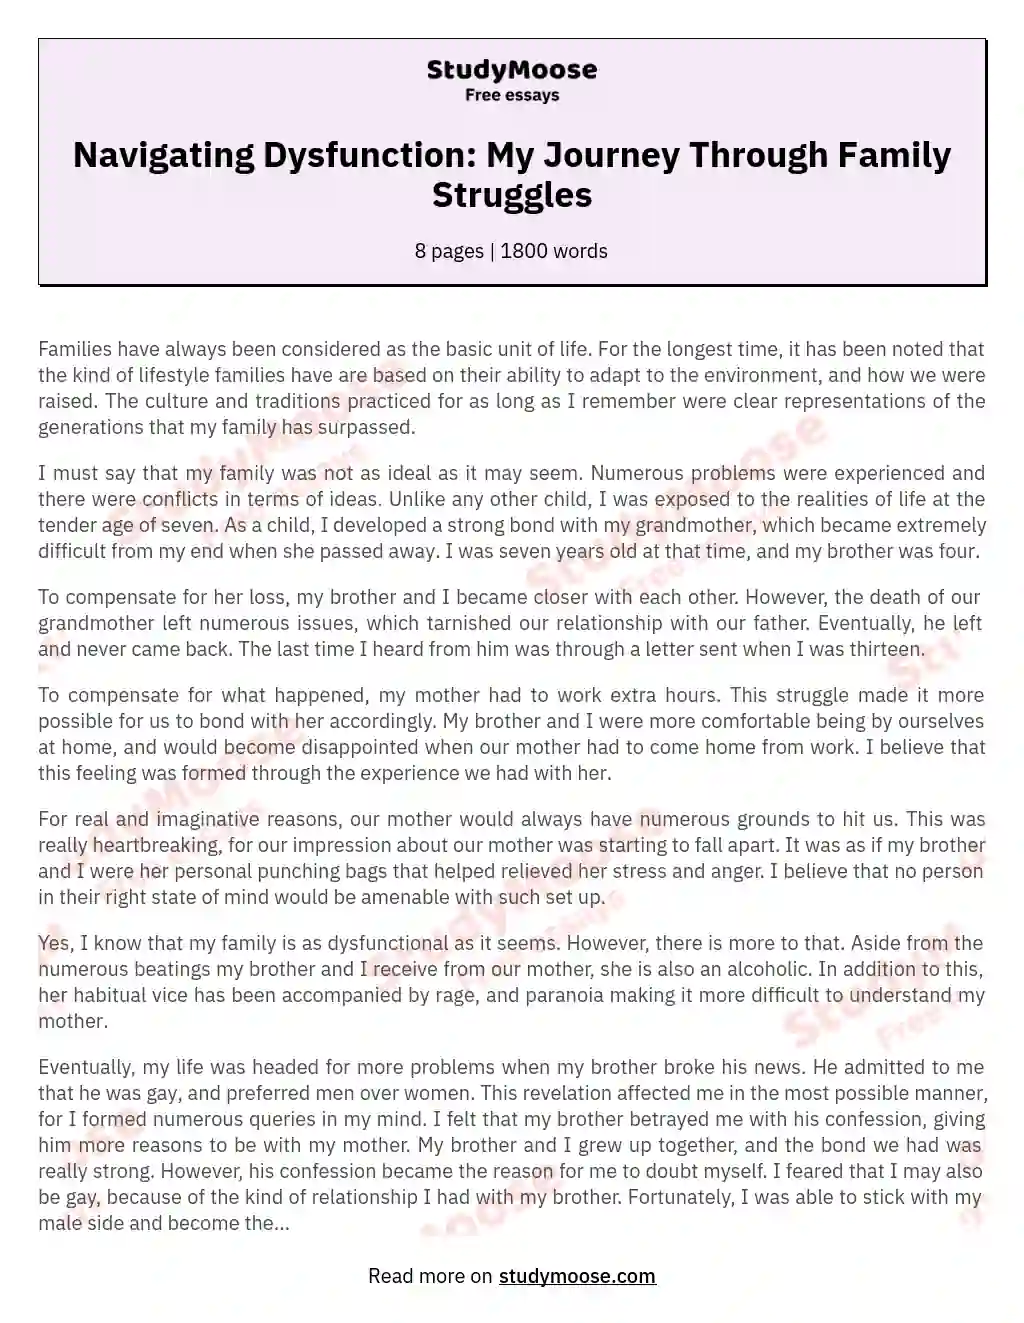 Navigating Dysfunction: My Journey Through Family Struggles essay